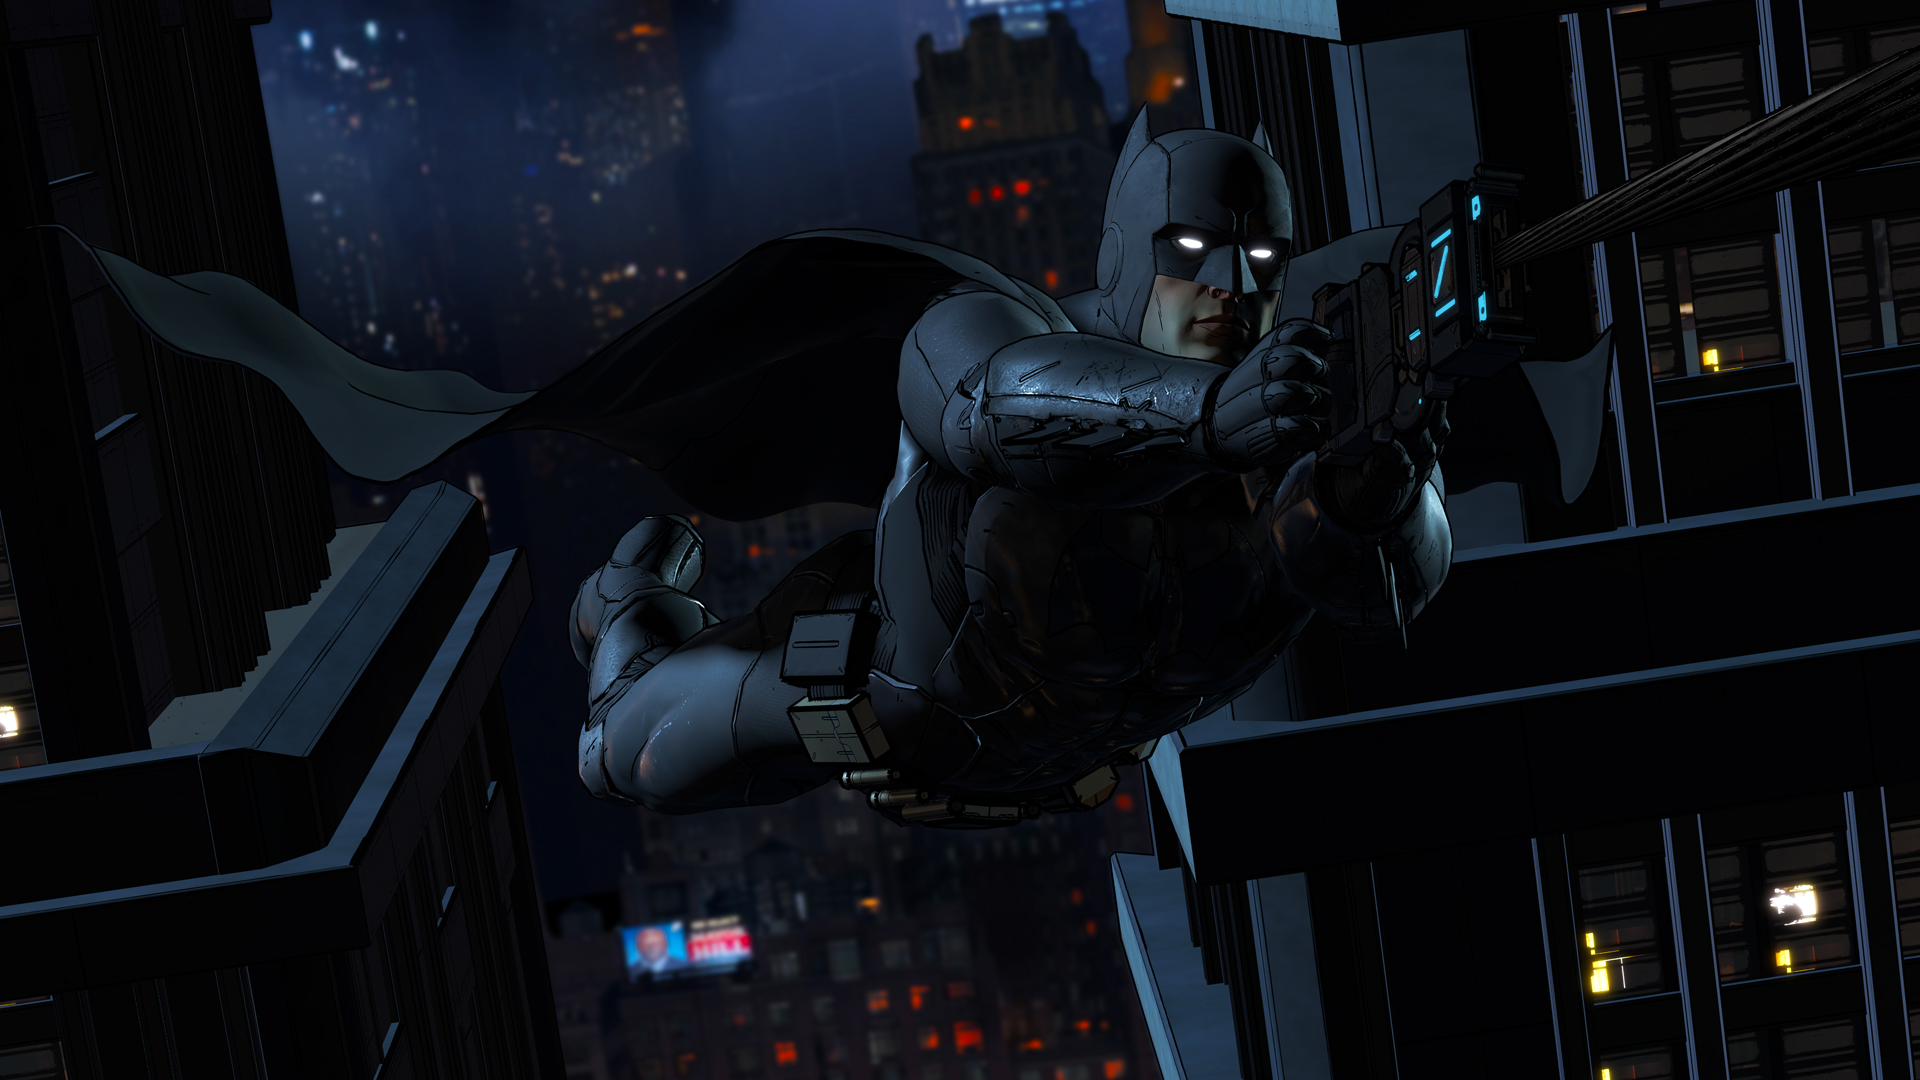 Batman - The Telltale Series screenshot 3